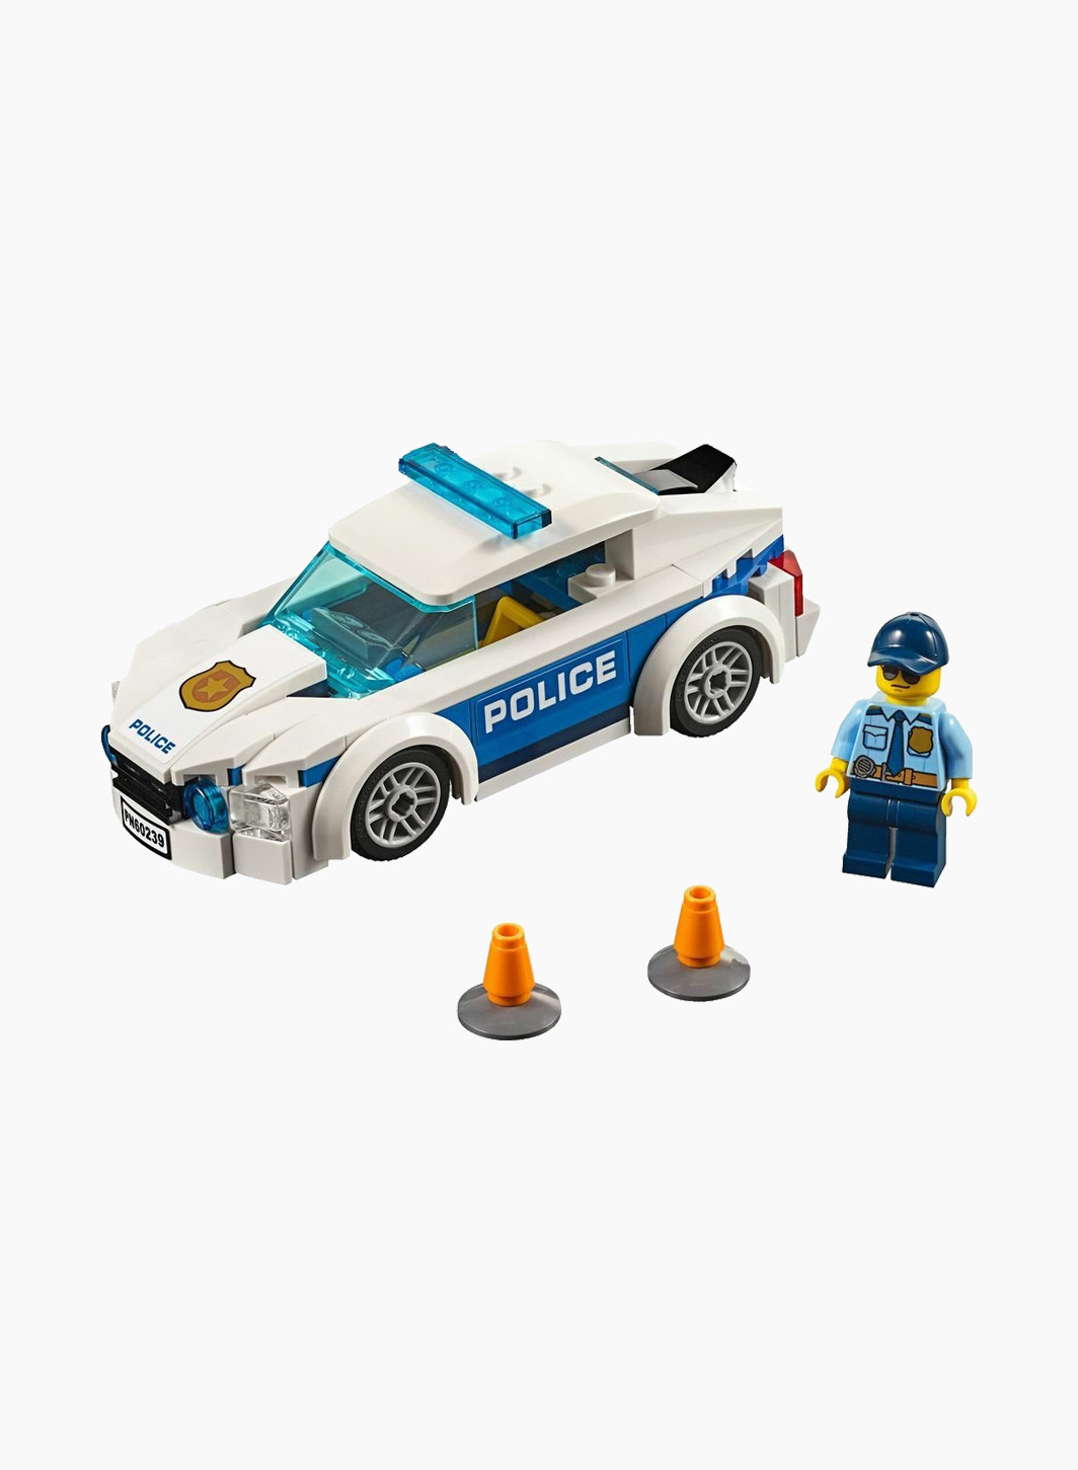 Lego City Constructor Police Patrol Car